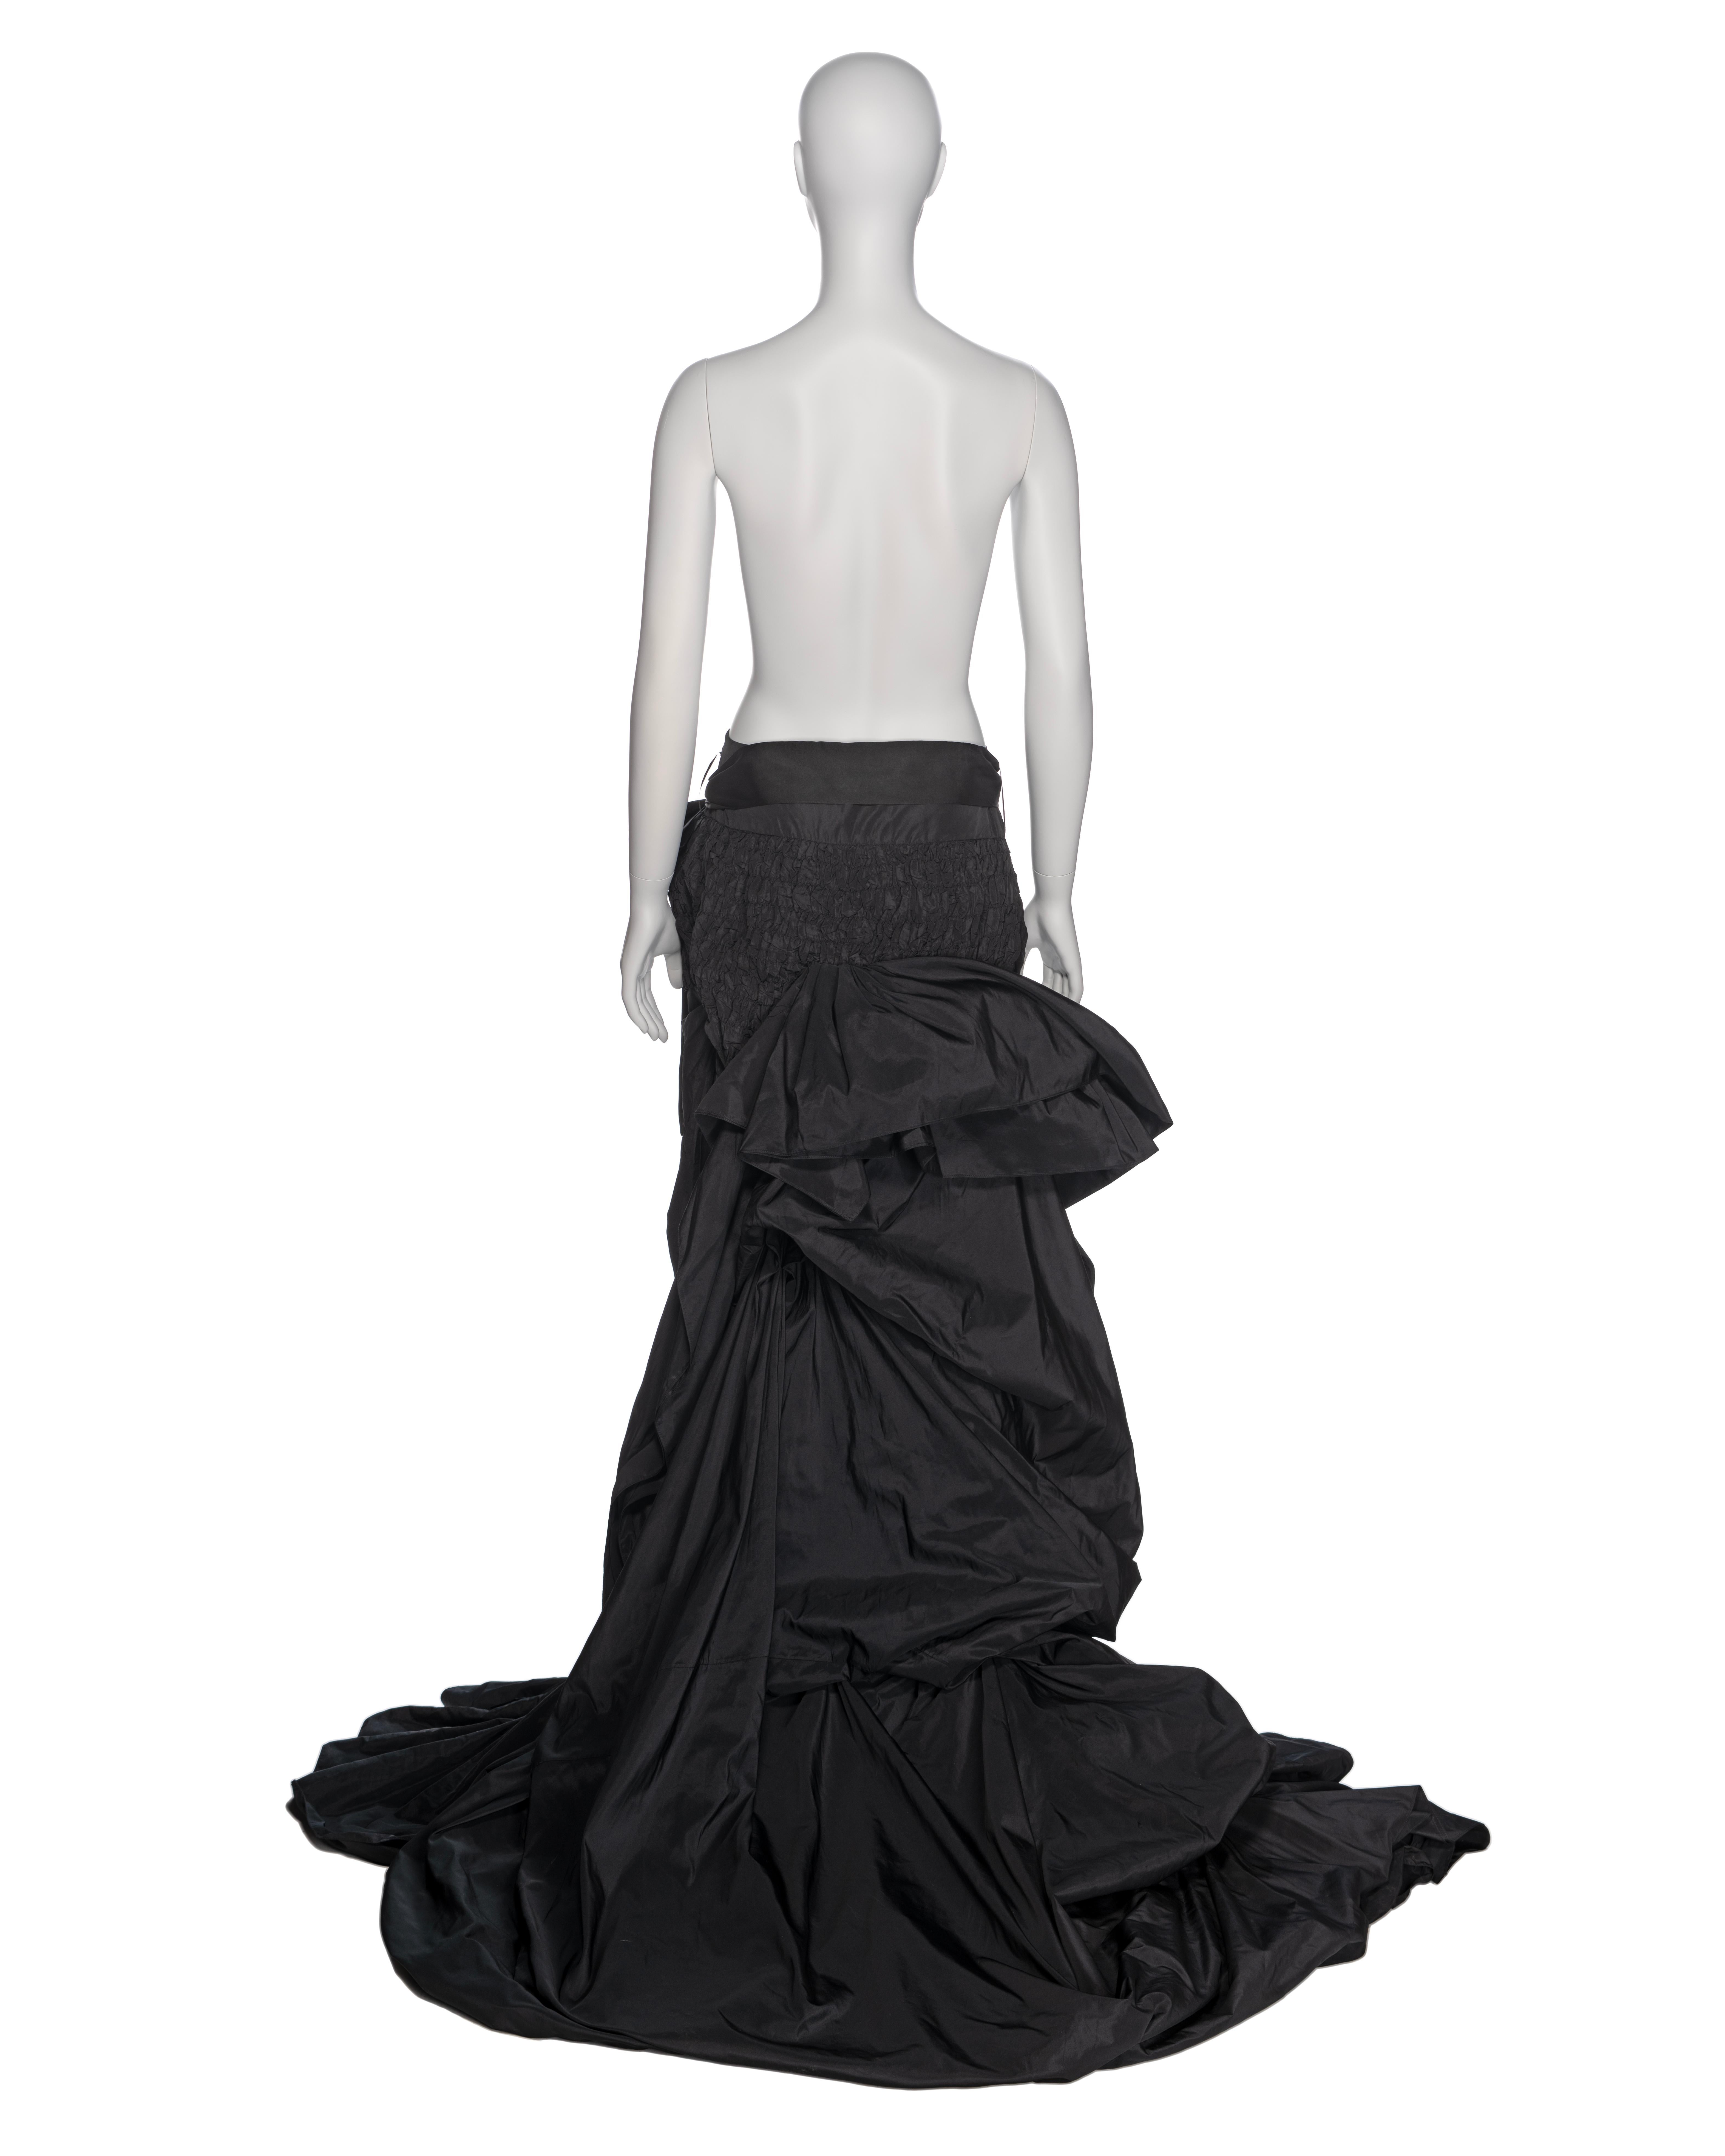 Yves Saint Laurent by Tom Ford Black Silk Taffeta Trained Evening Skirt, FW 2001 For Sale 10